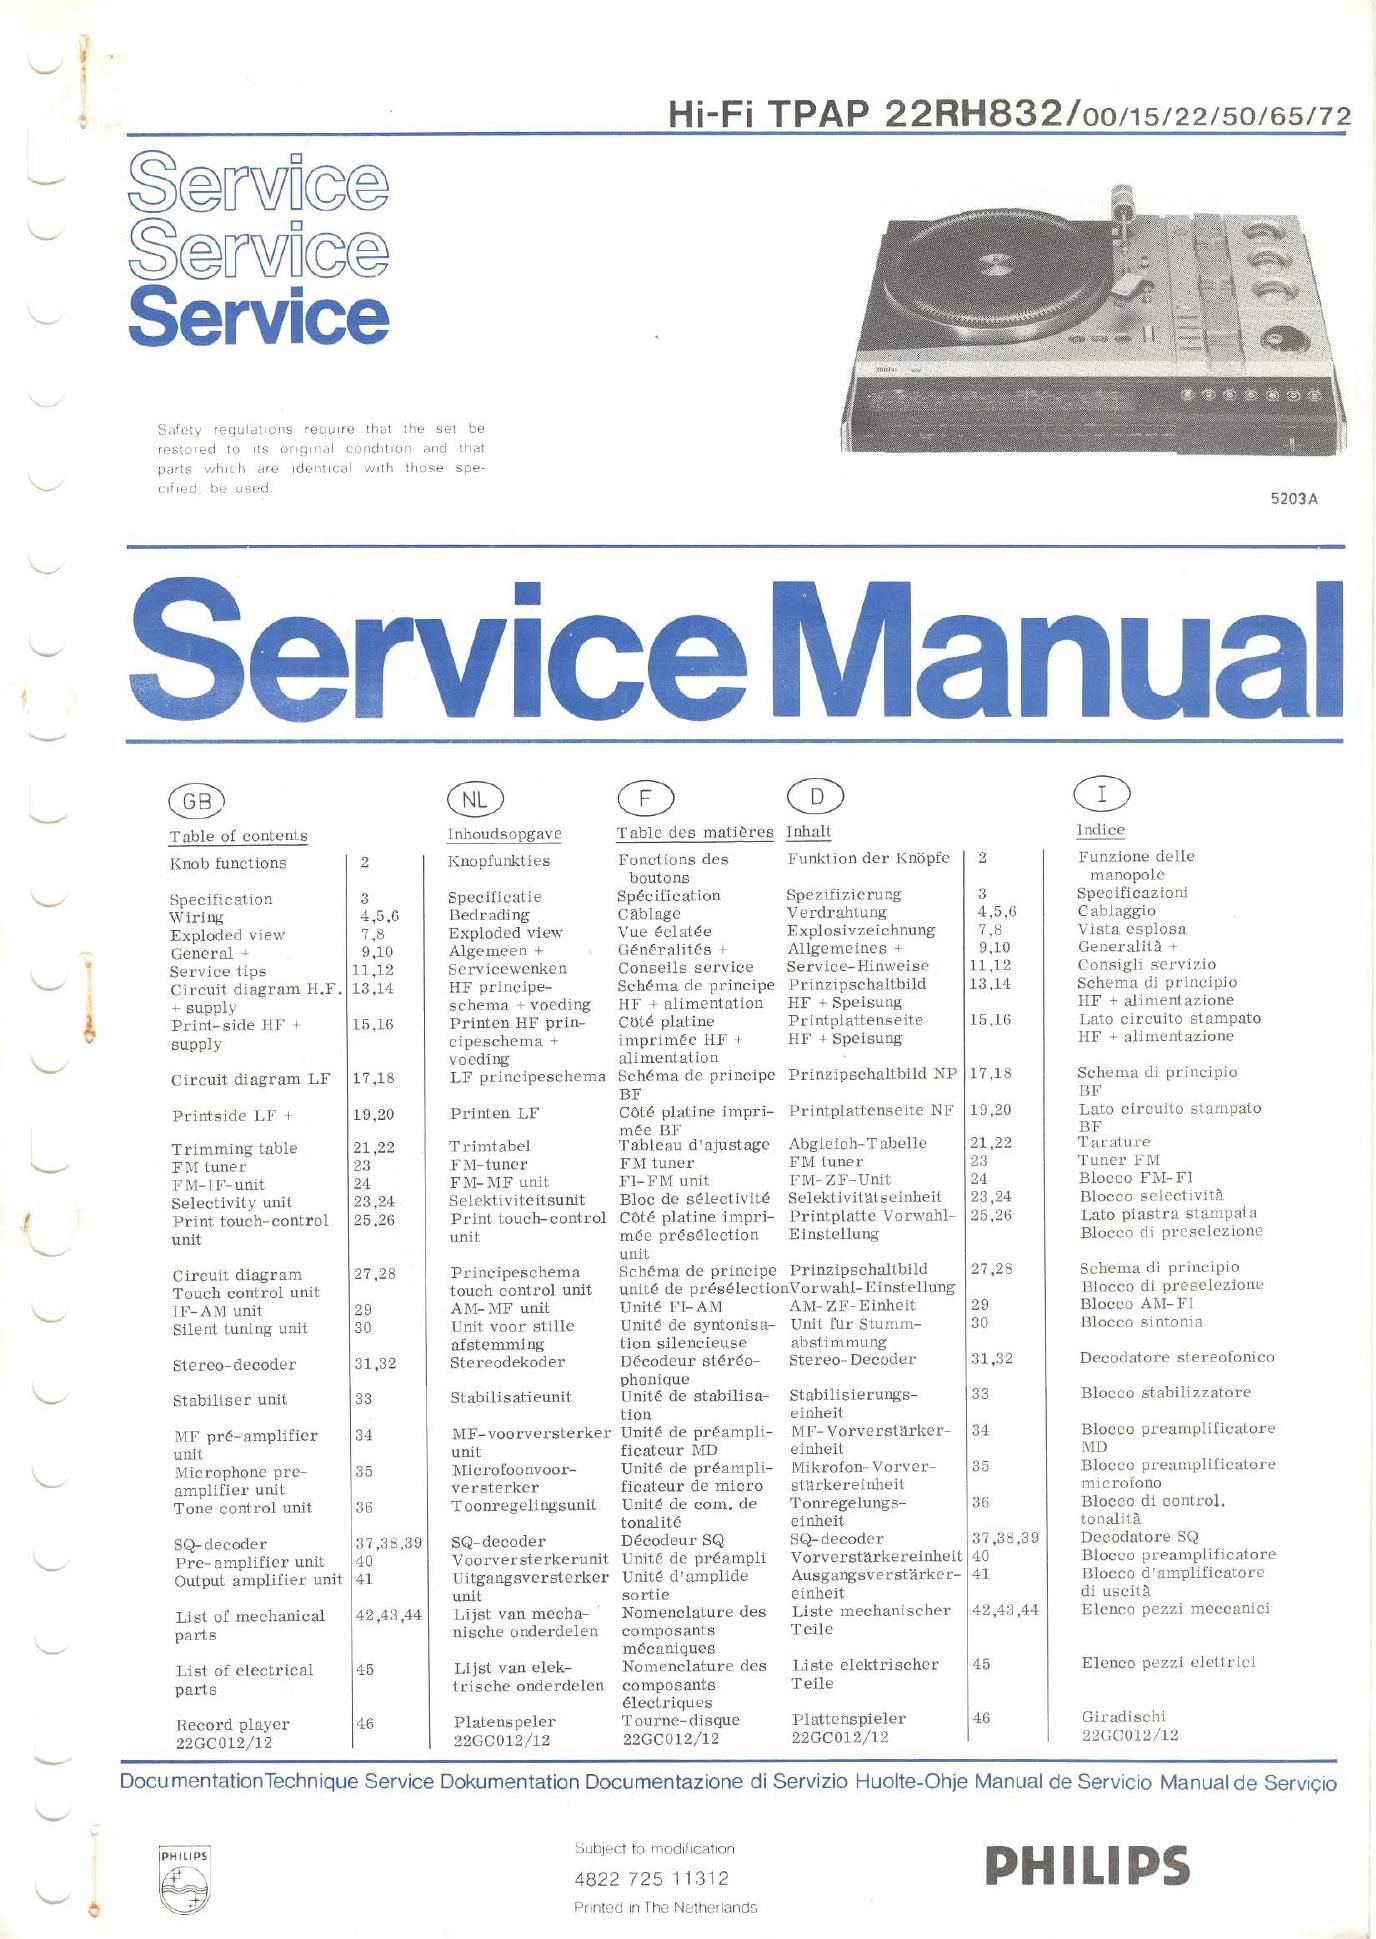 philips 22 rh 832 service manual